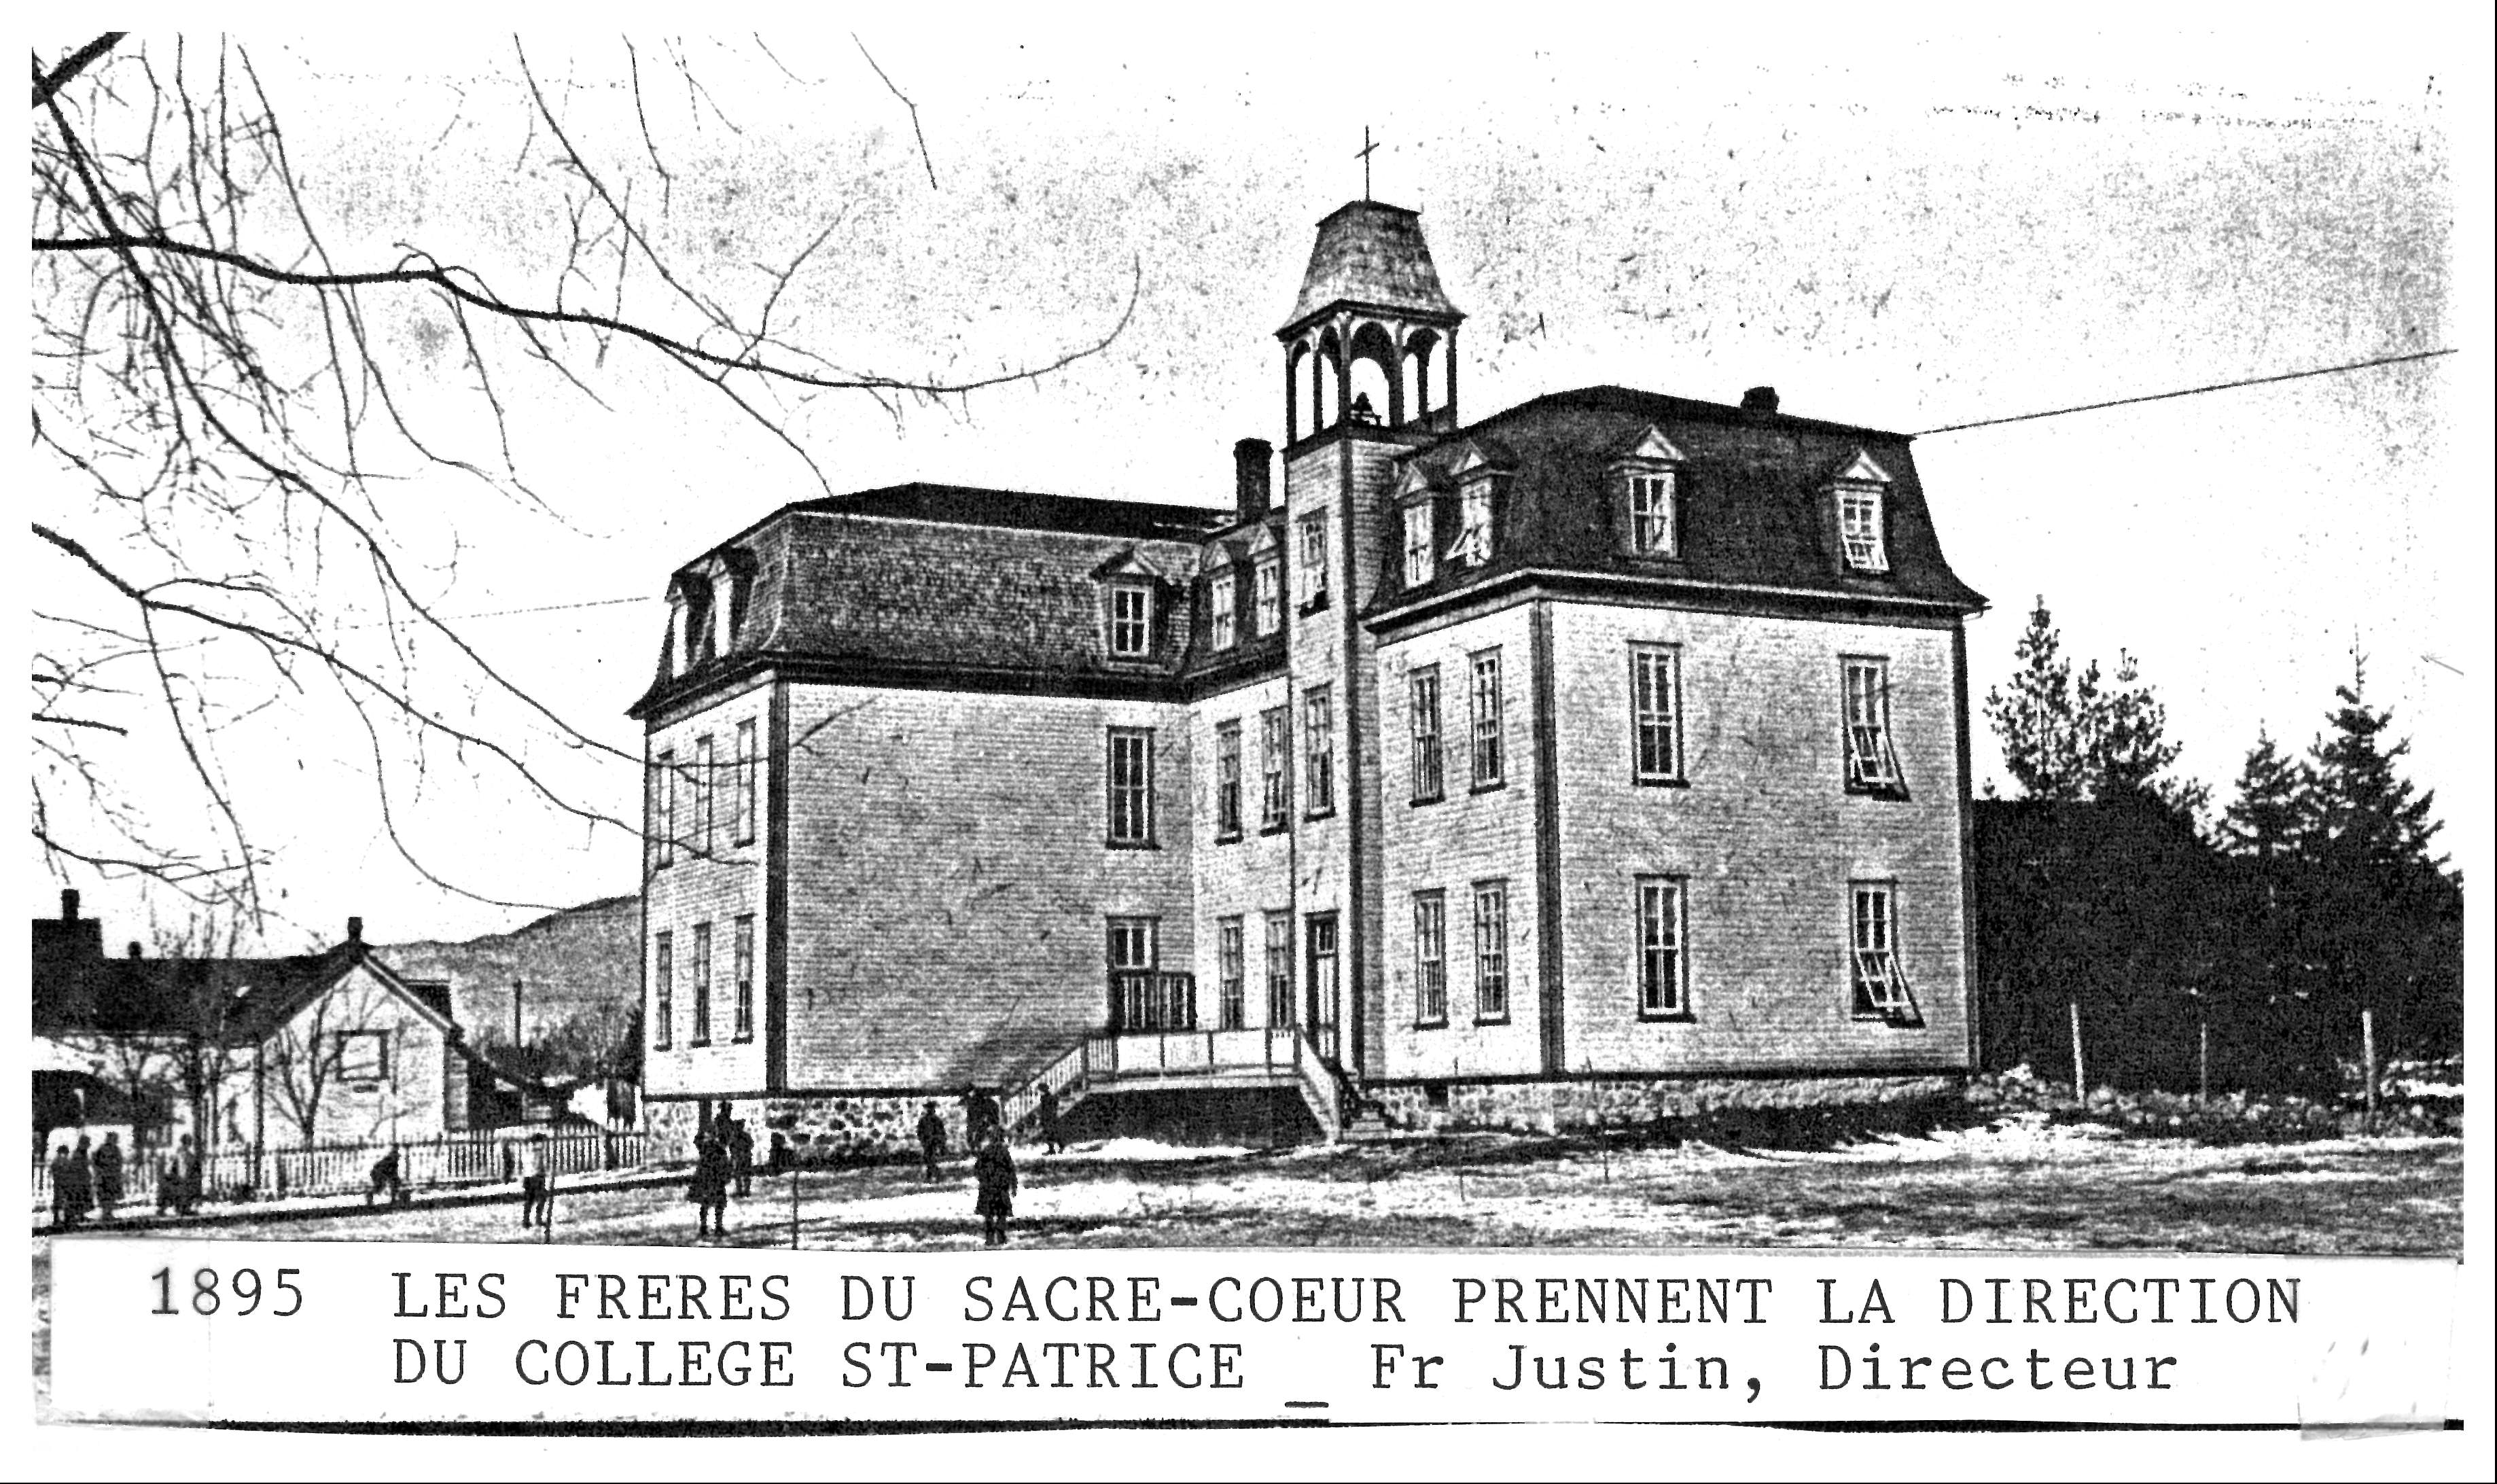 St-Patrice College